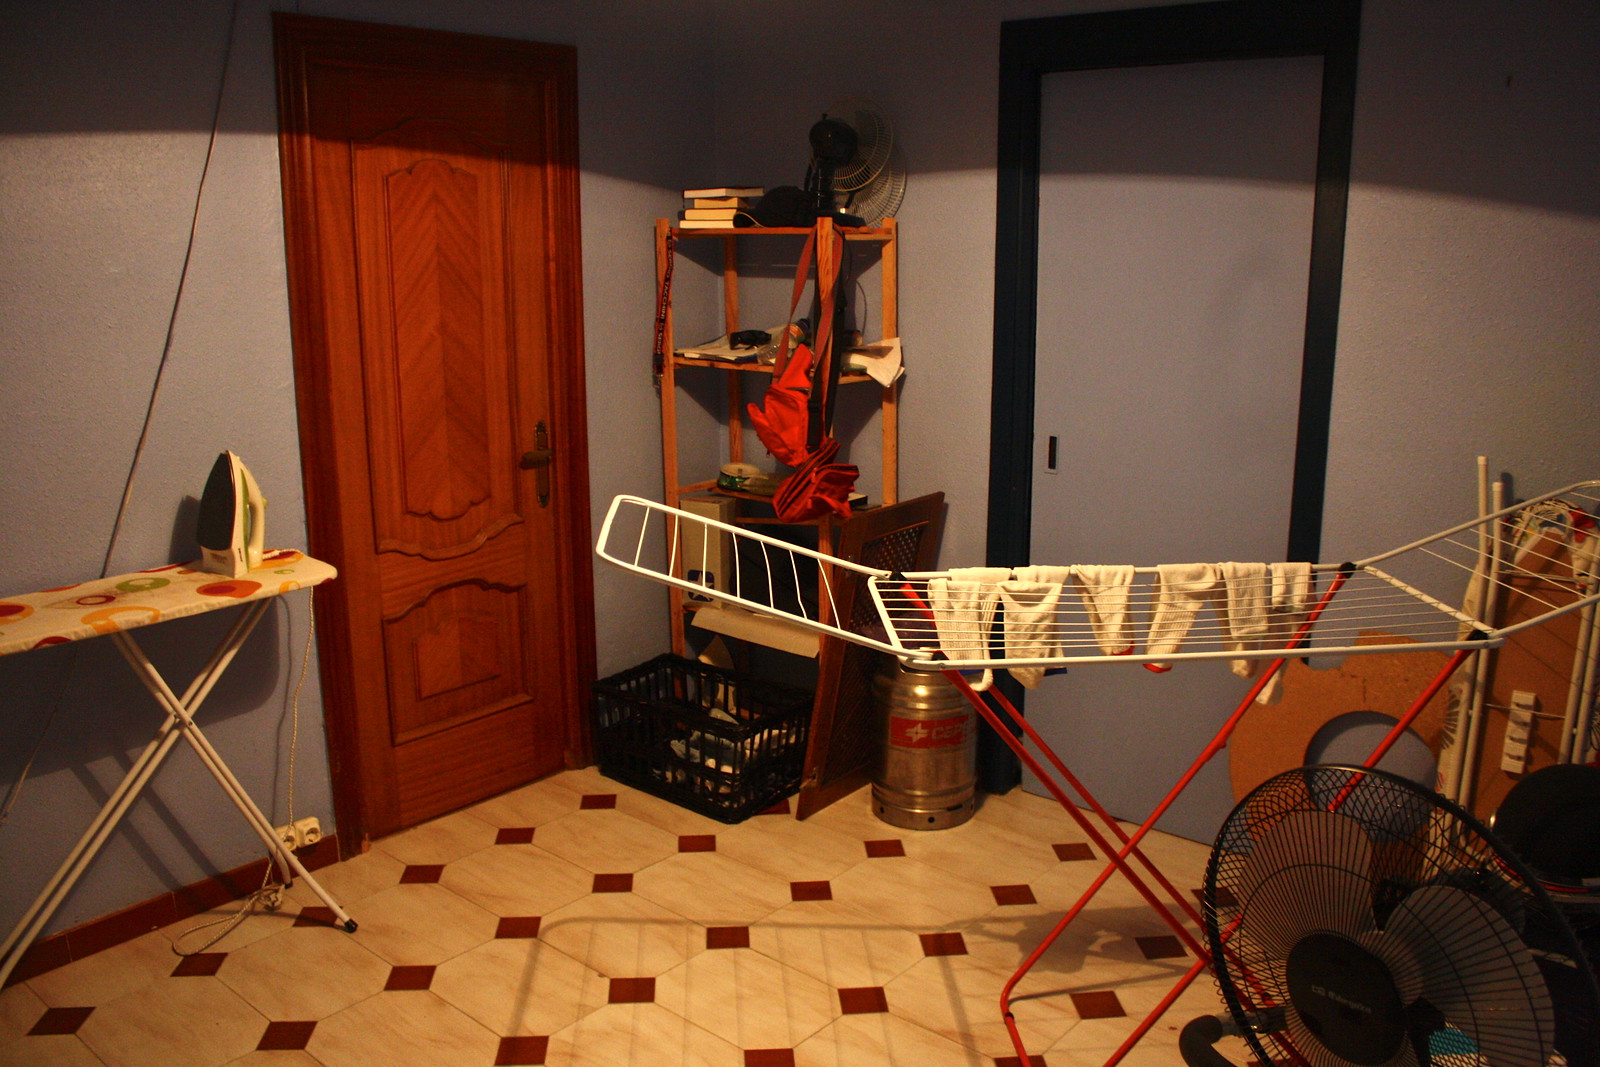 Spanish tendedero drying rack